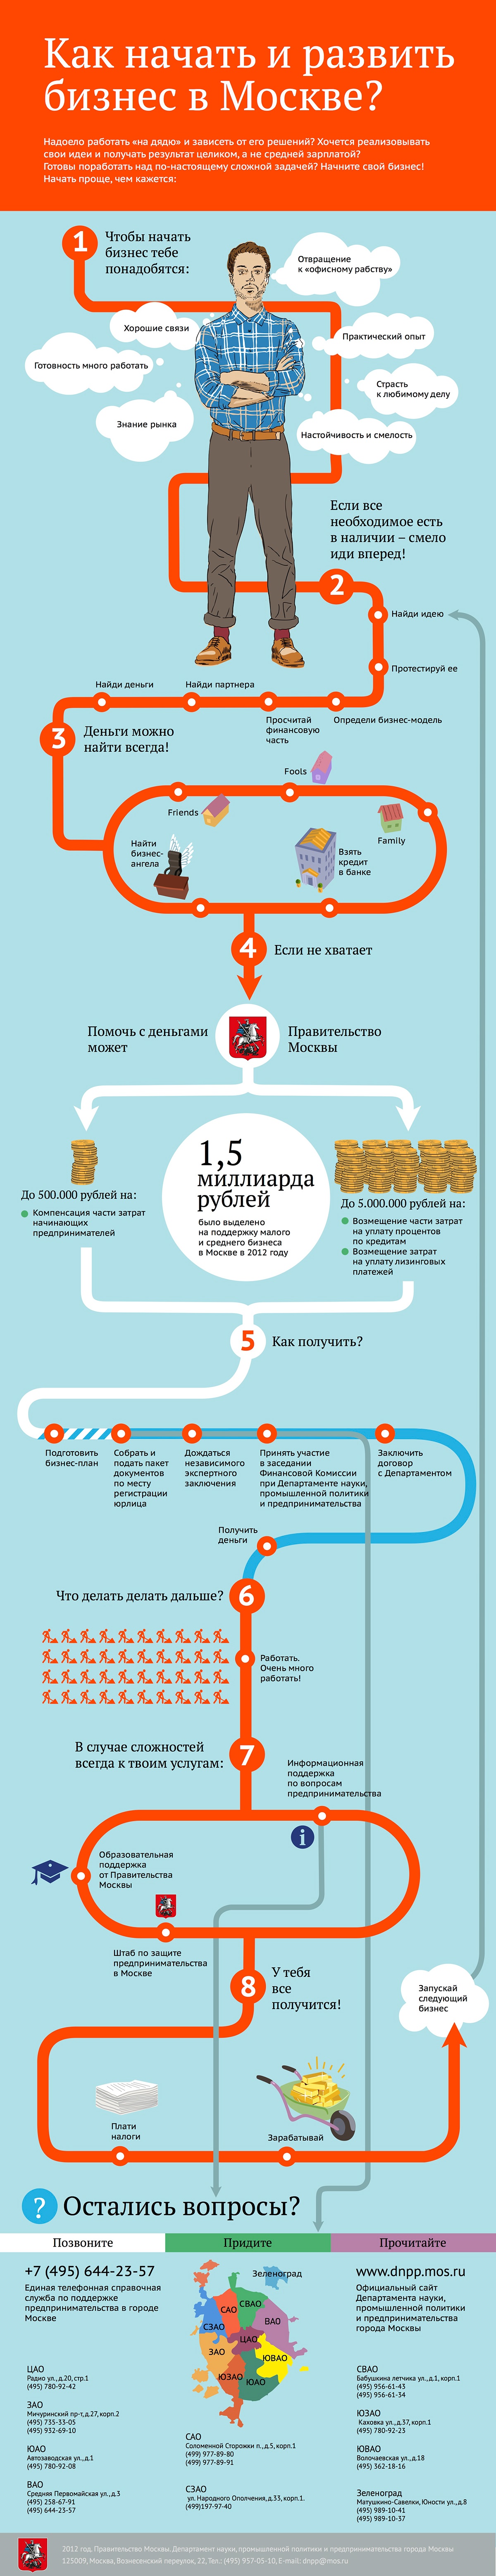 entrepreneur entreprenership Moscow Russia money business idea